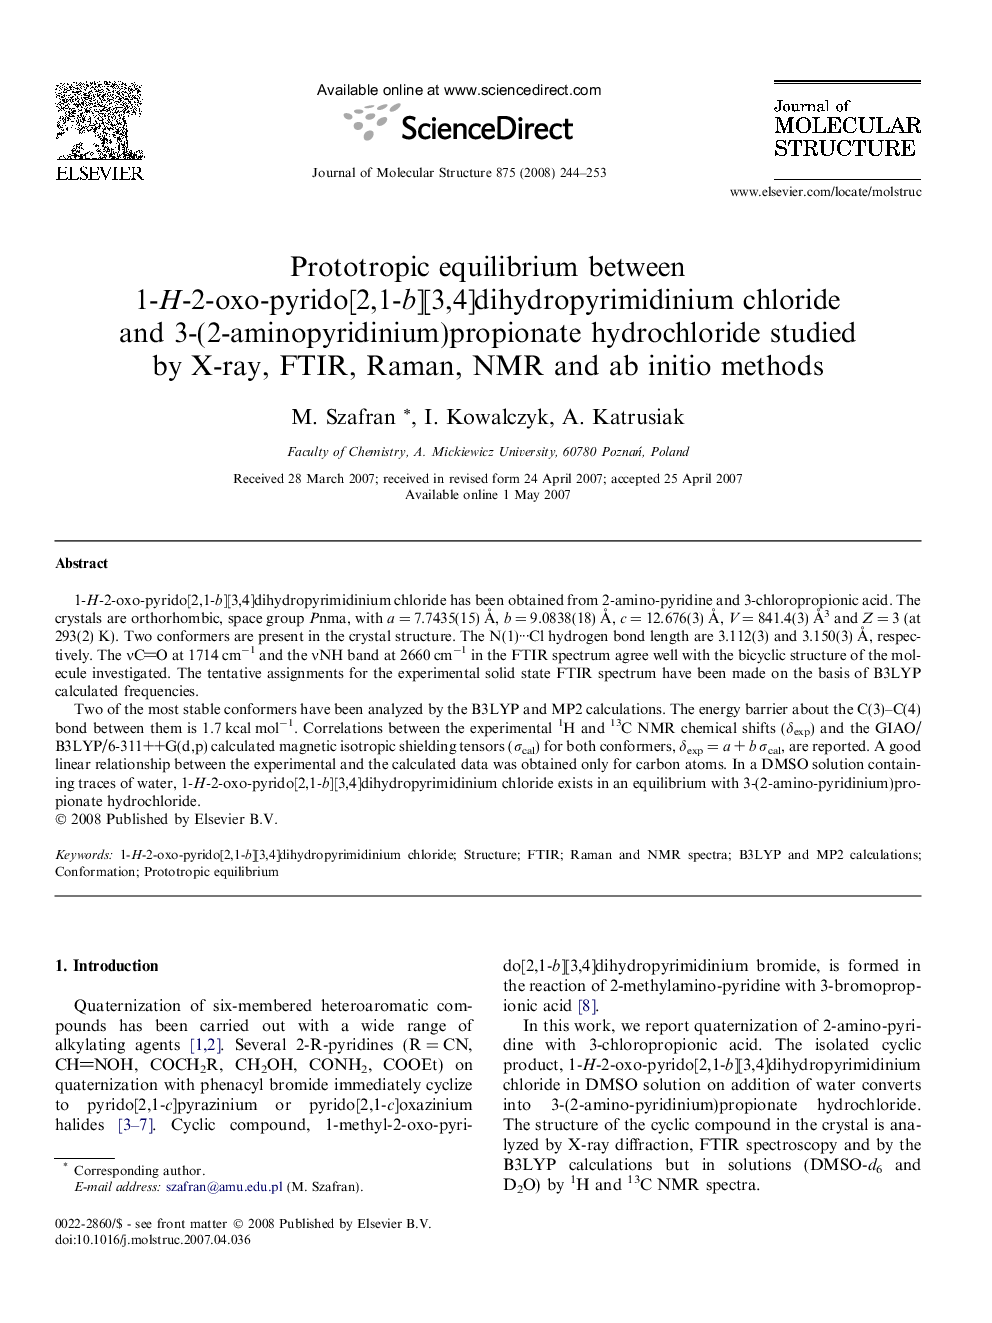 Prototropic equilibrium between 1-H-2-oxo-pyrido[2,1-b][3,4]dihydropyrimidinium chloride and 3-(2-aminopyridinium)propionate hydrochloride studied by X-ray, FTIR, Raman, NMR and ab initio methods